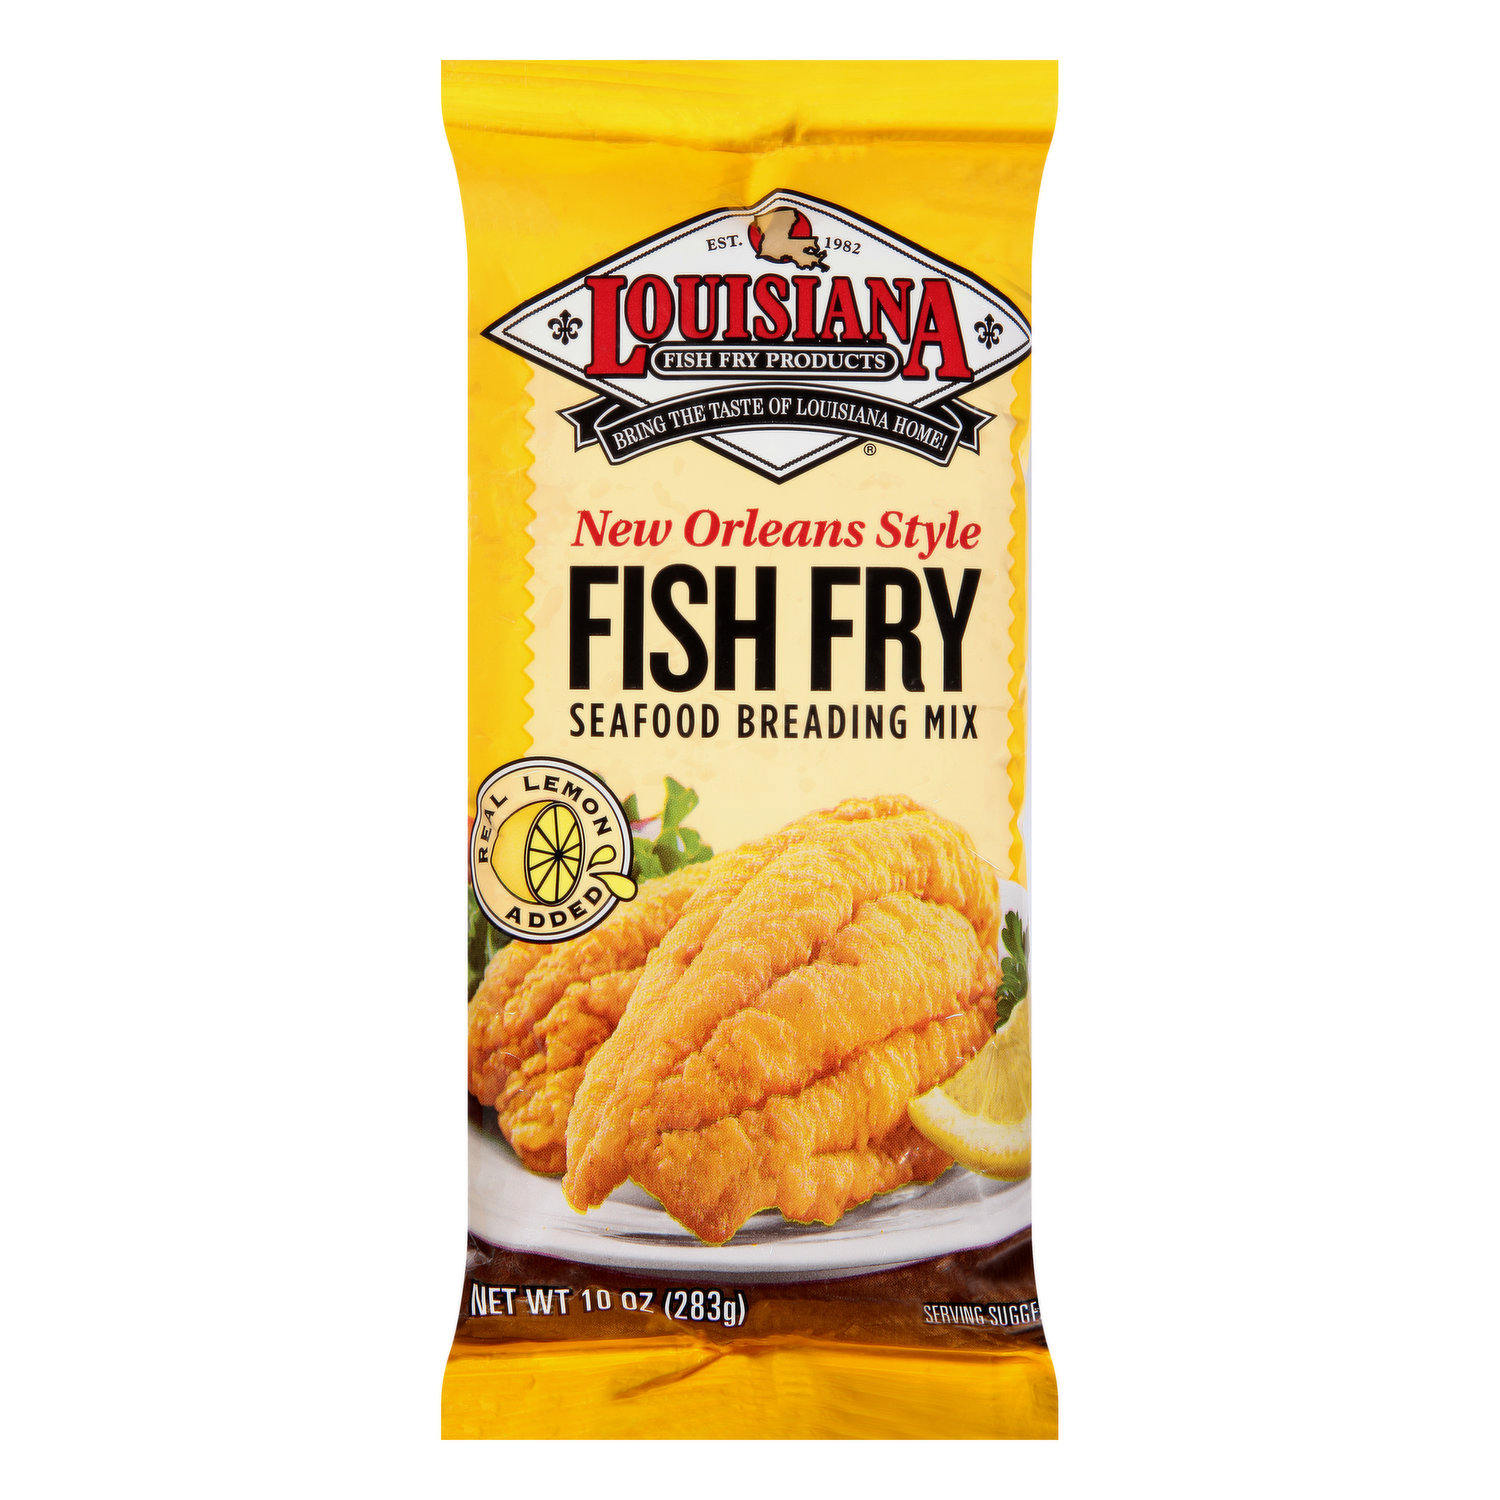 Homestyle Chicken Fry 9 oz - Louisiana Fish Fry